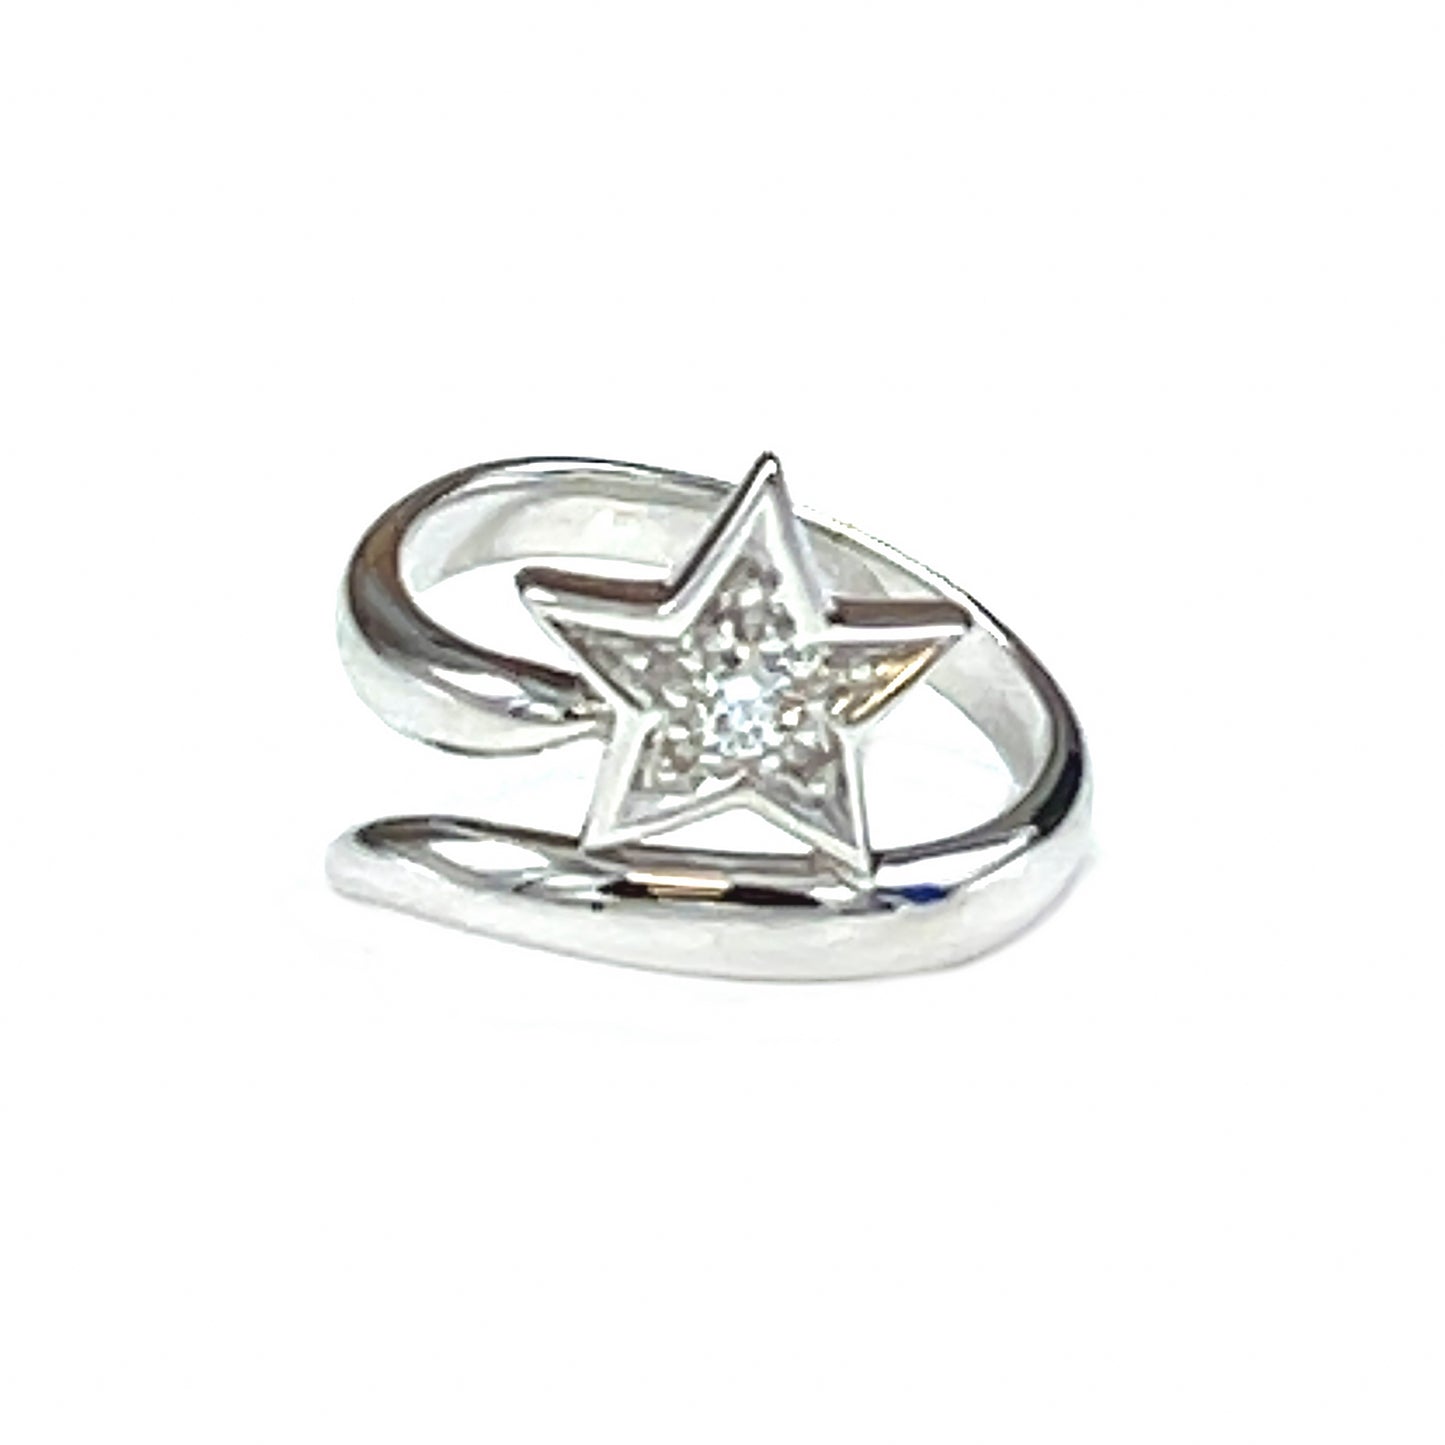 CHANEL  Jewelry  Chanel 5a Silver Crystal Cc Logo Ring  Poshmark